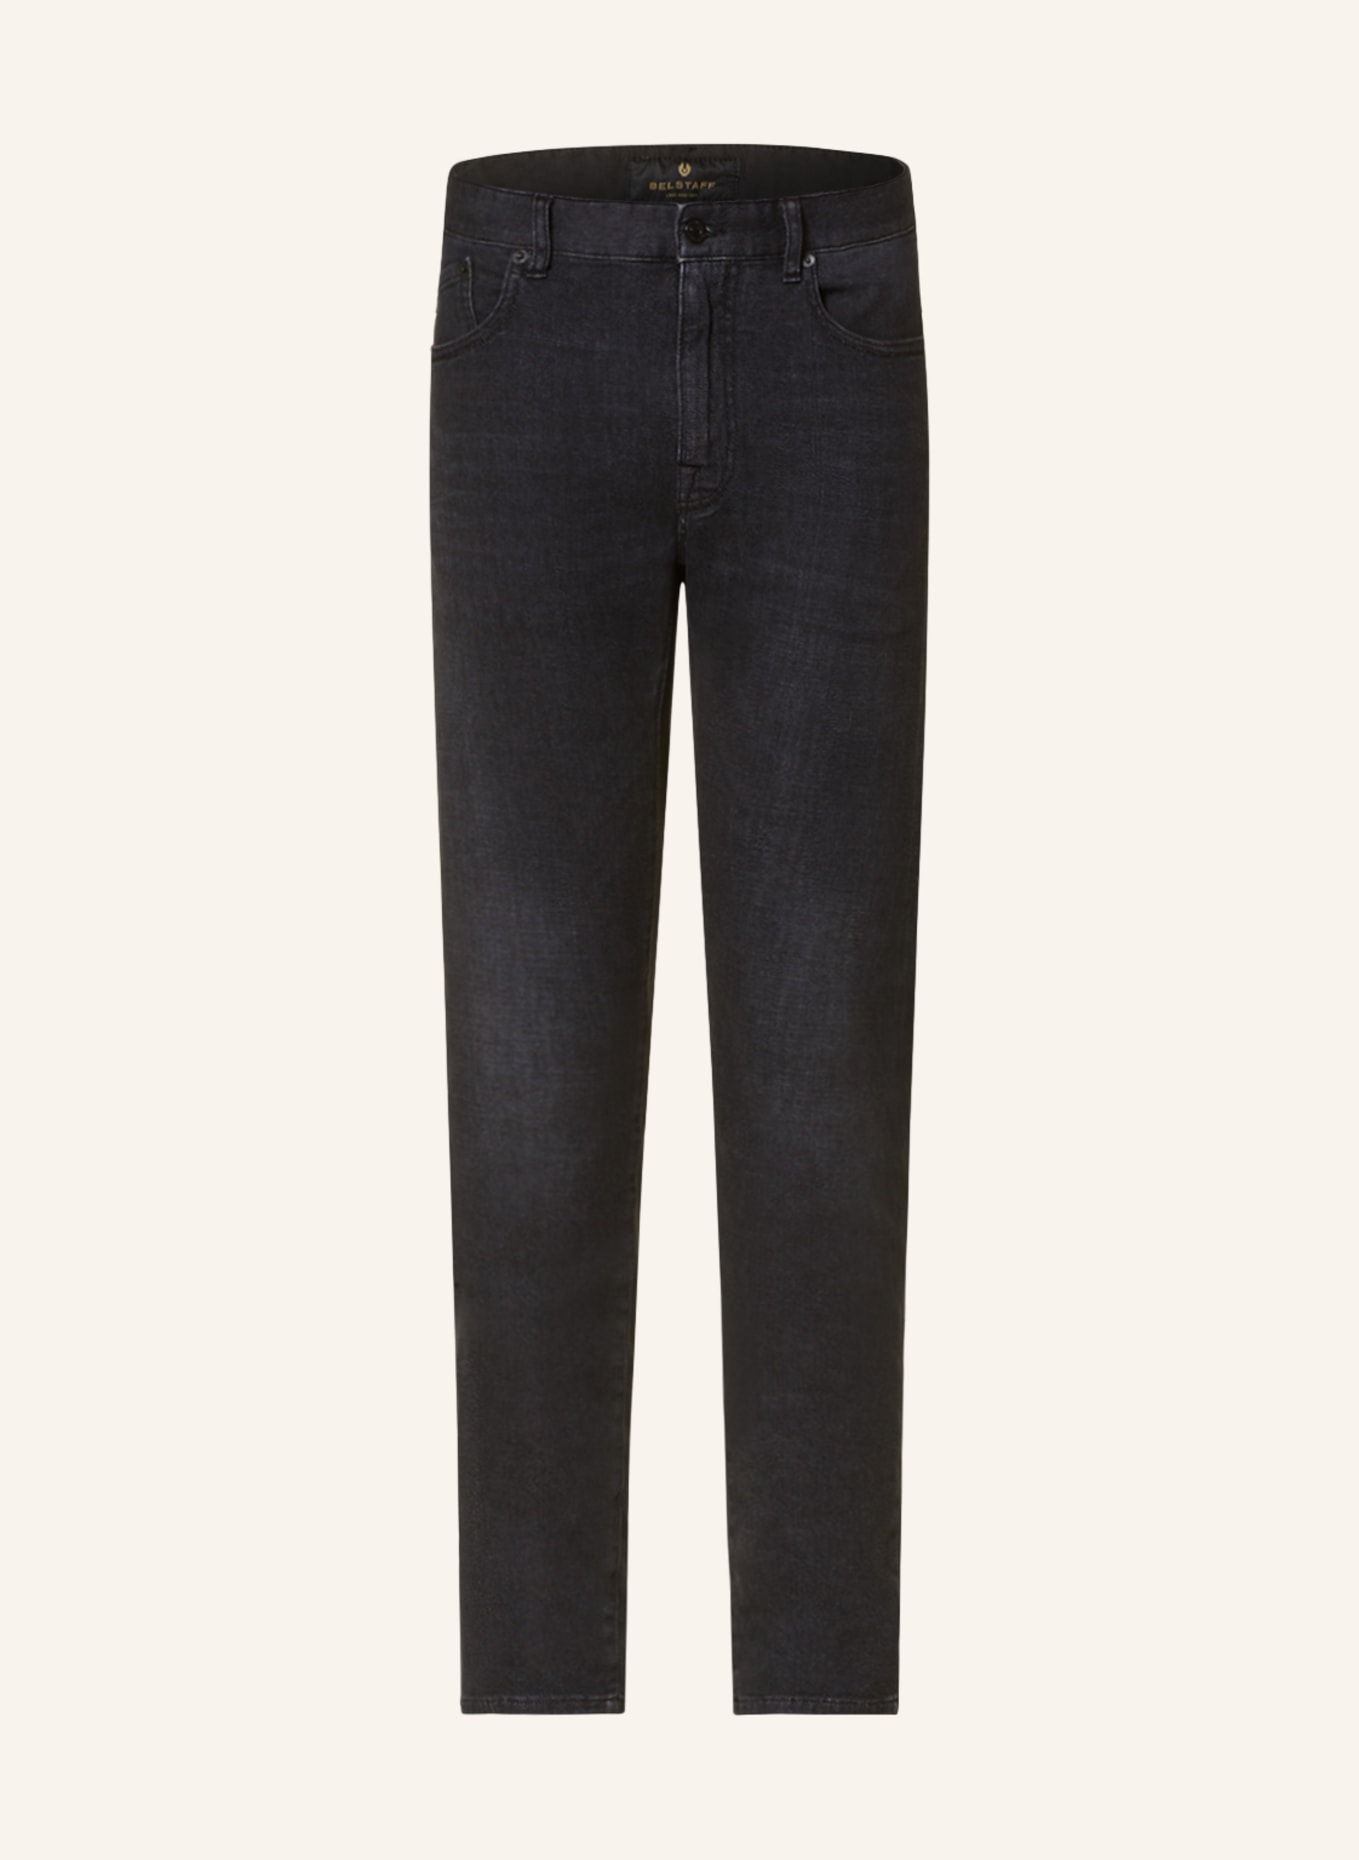 BELSTAFF Jeans LONGTON Slim Fit, Farbe: ANTIQUE BLACK ANTIQUE BLACK (Bild 1)